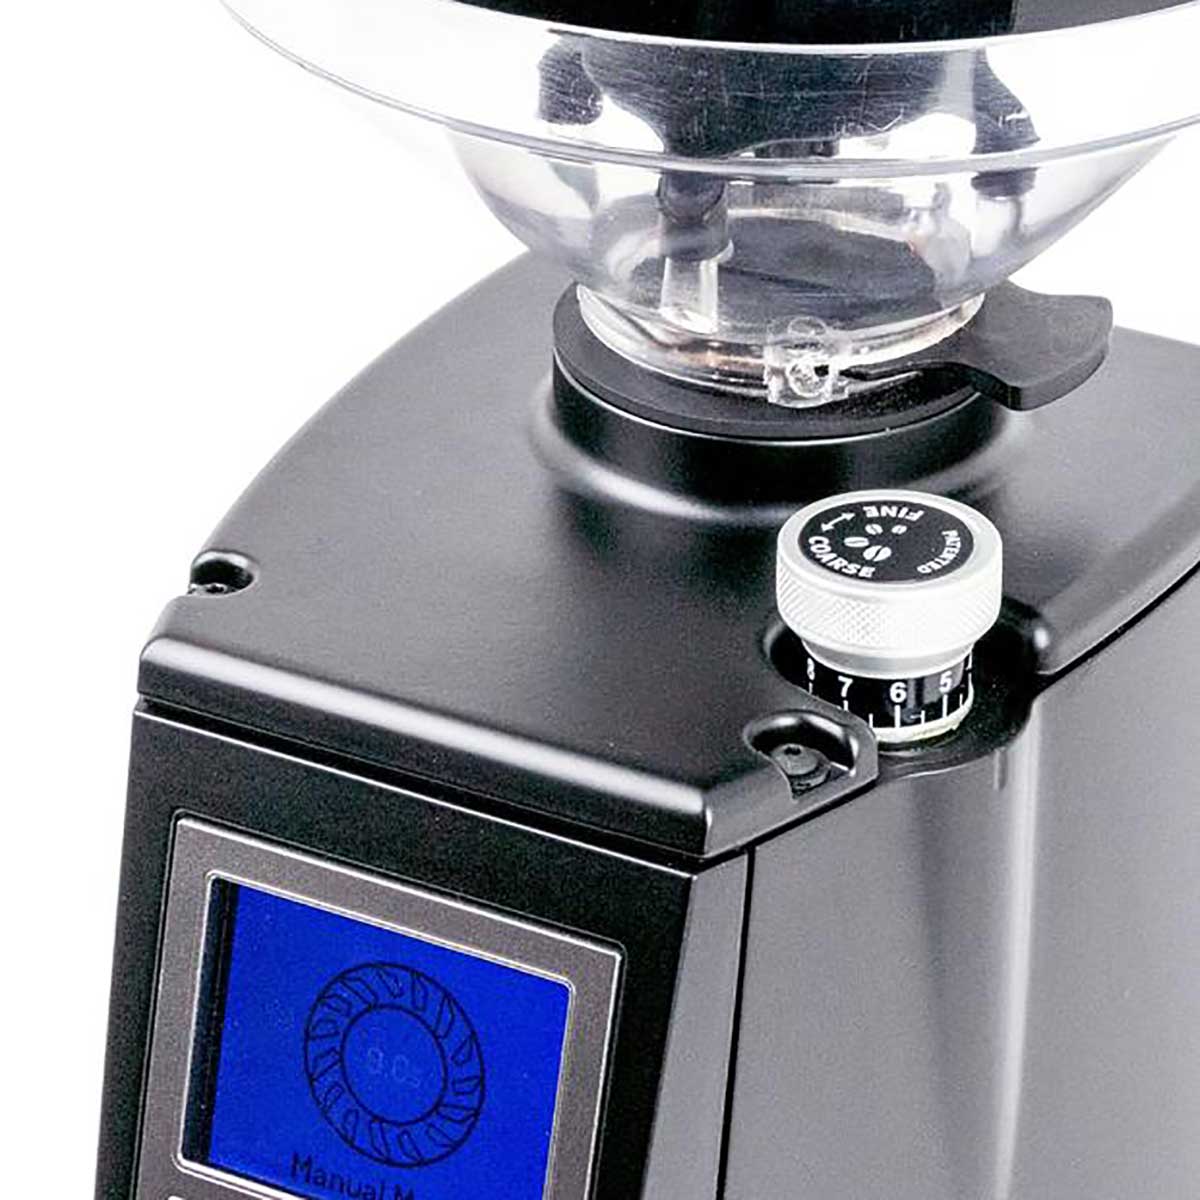 eureka atom espresso grinder worm gear stepless adjustment knob